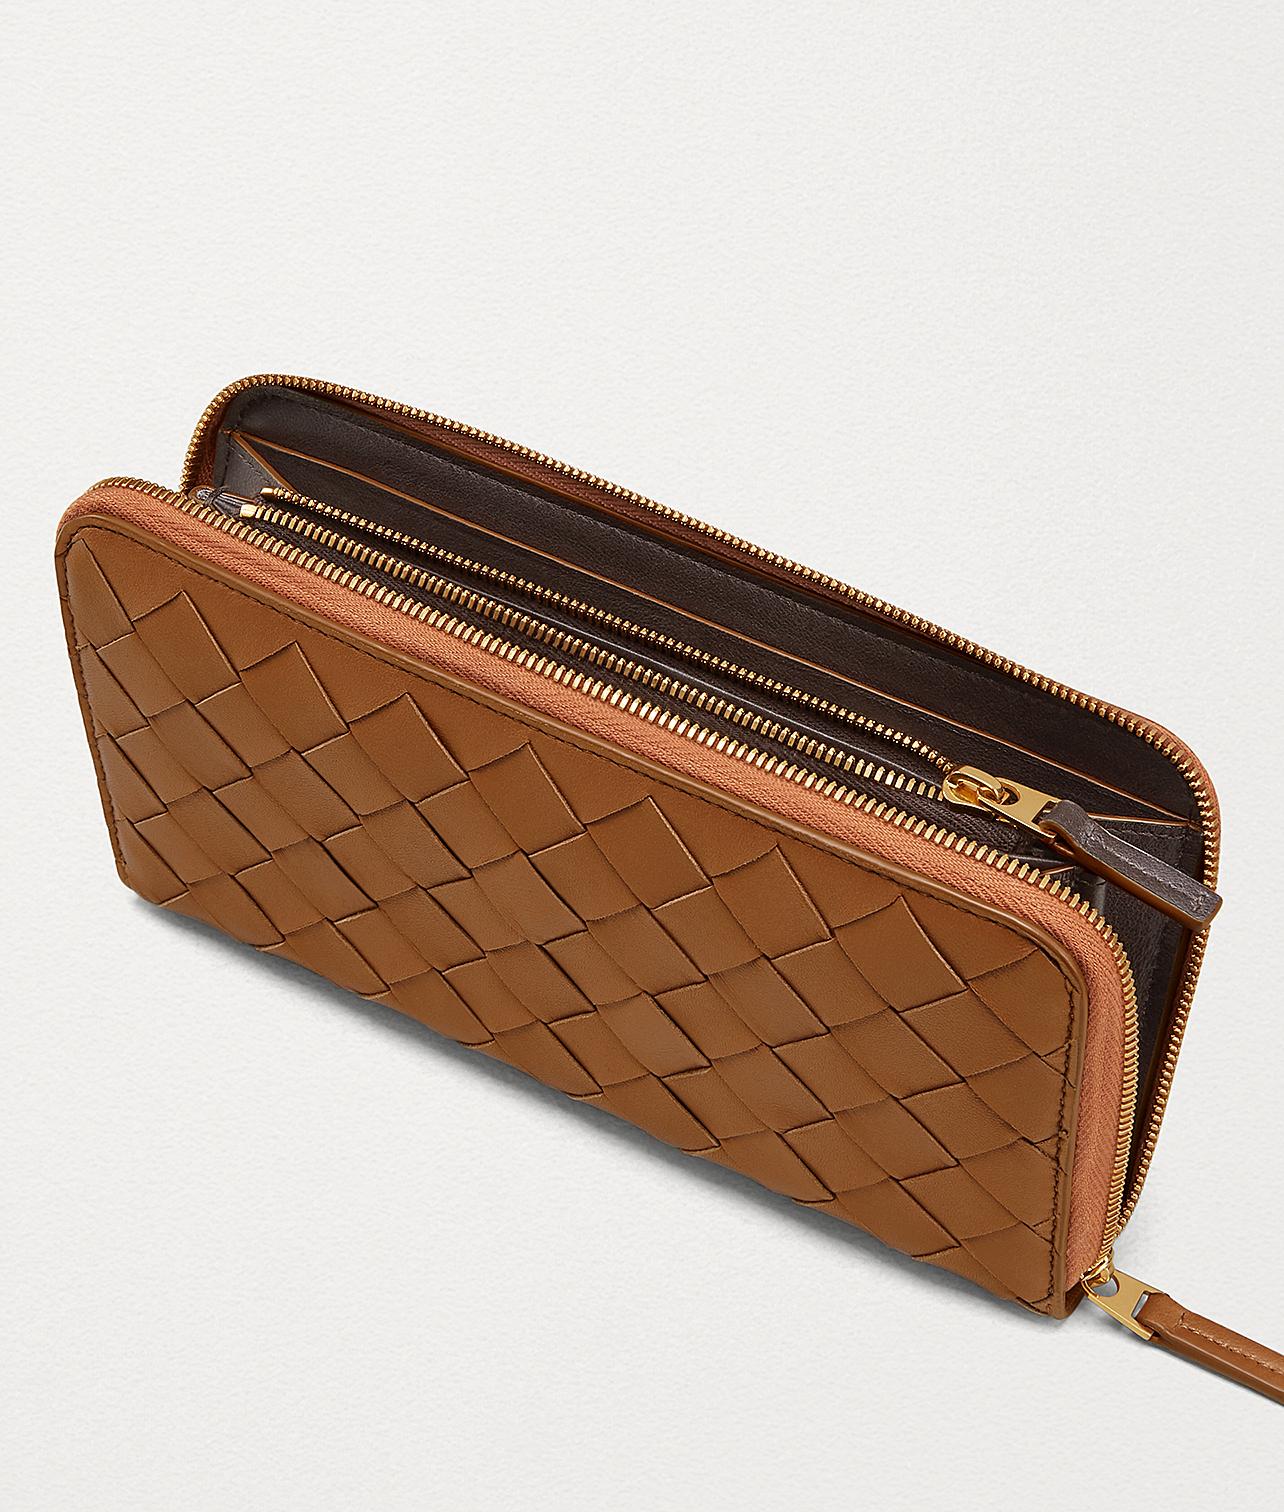 Bottega Veneta Leather Medium Zip Around Wallet in Brown - Lyst